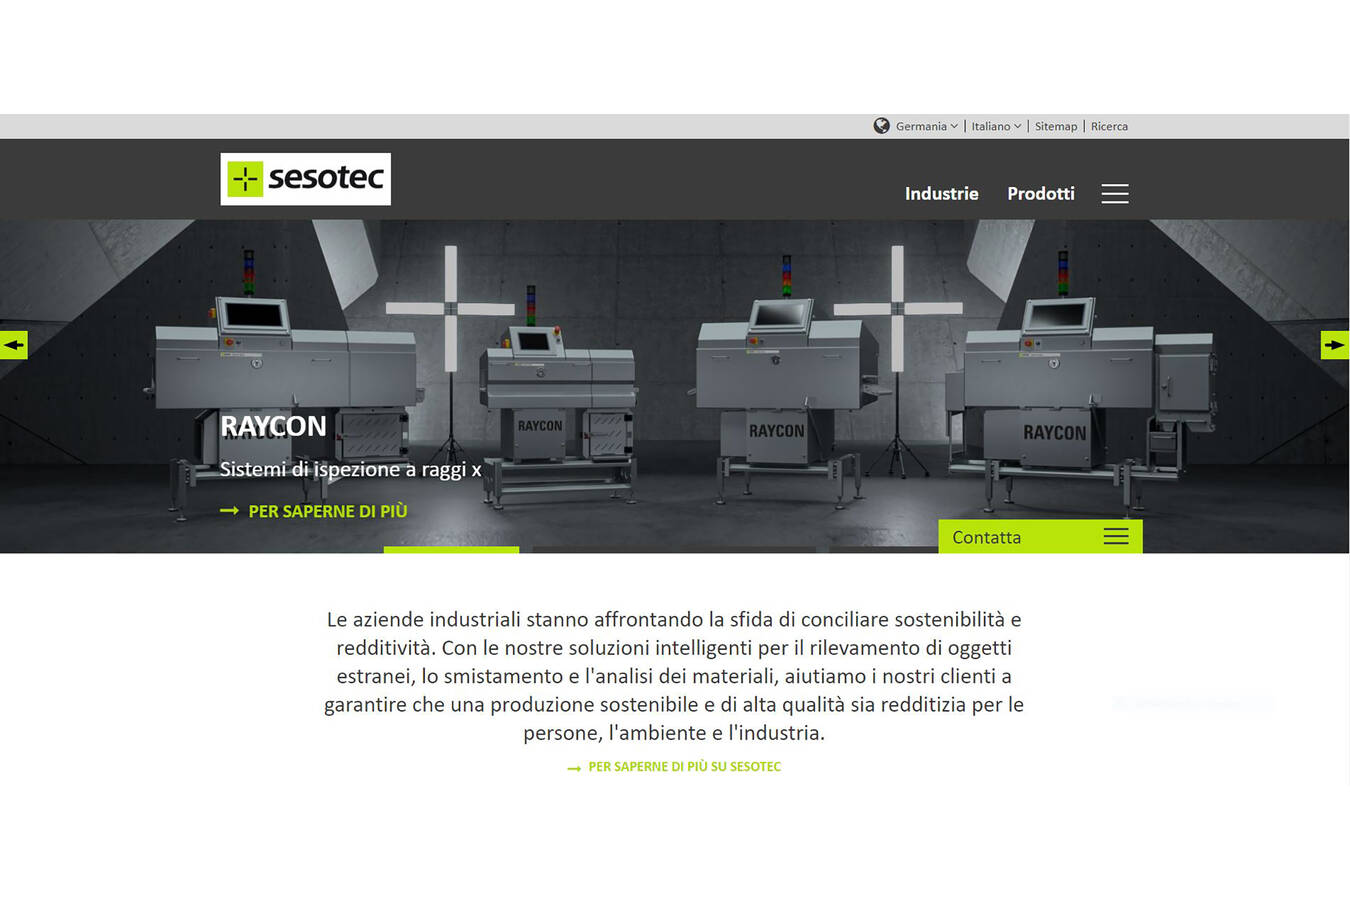 Fantastico: Sesotec’s website now also in Italian 